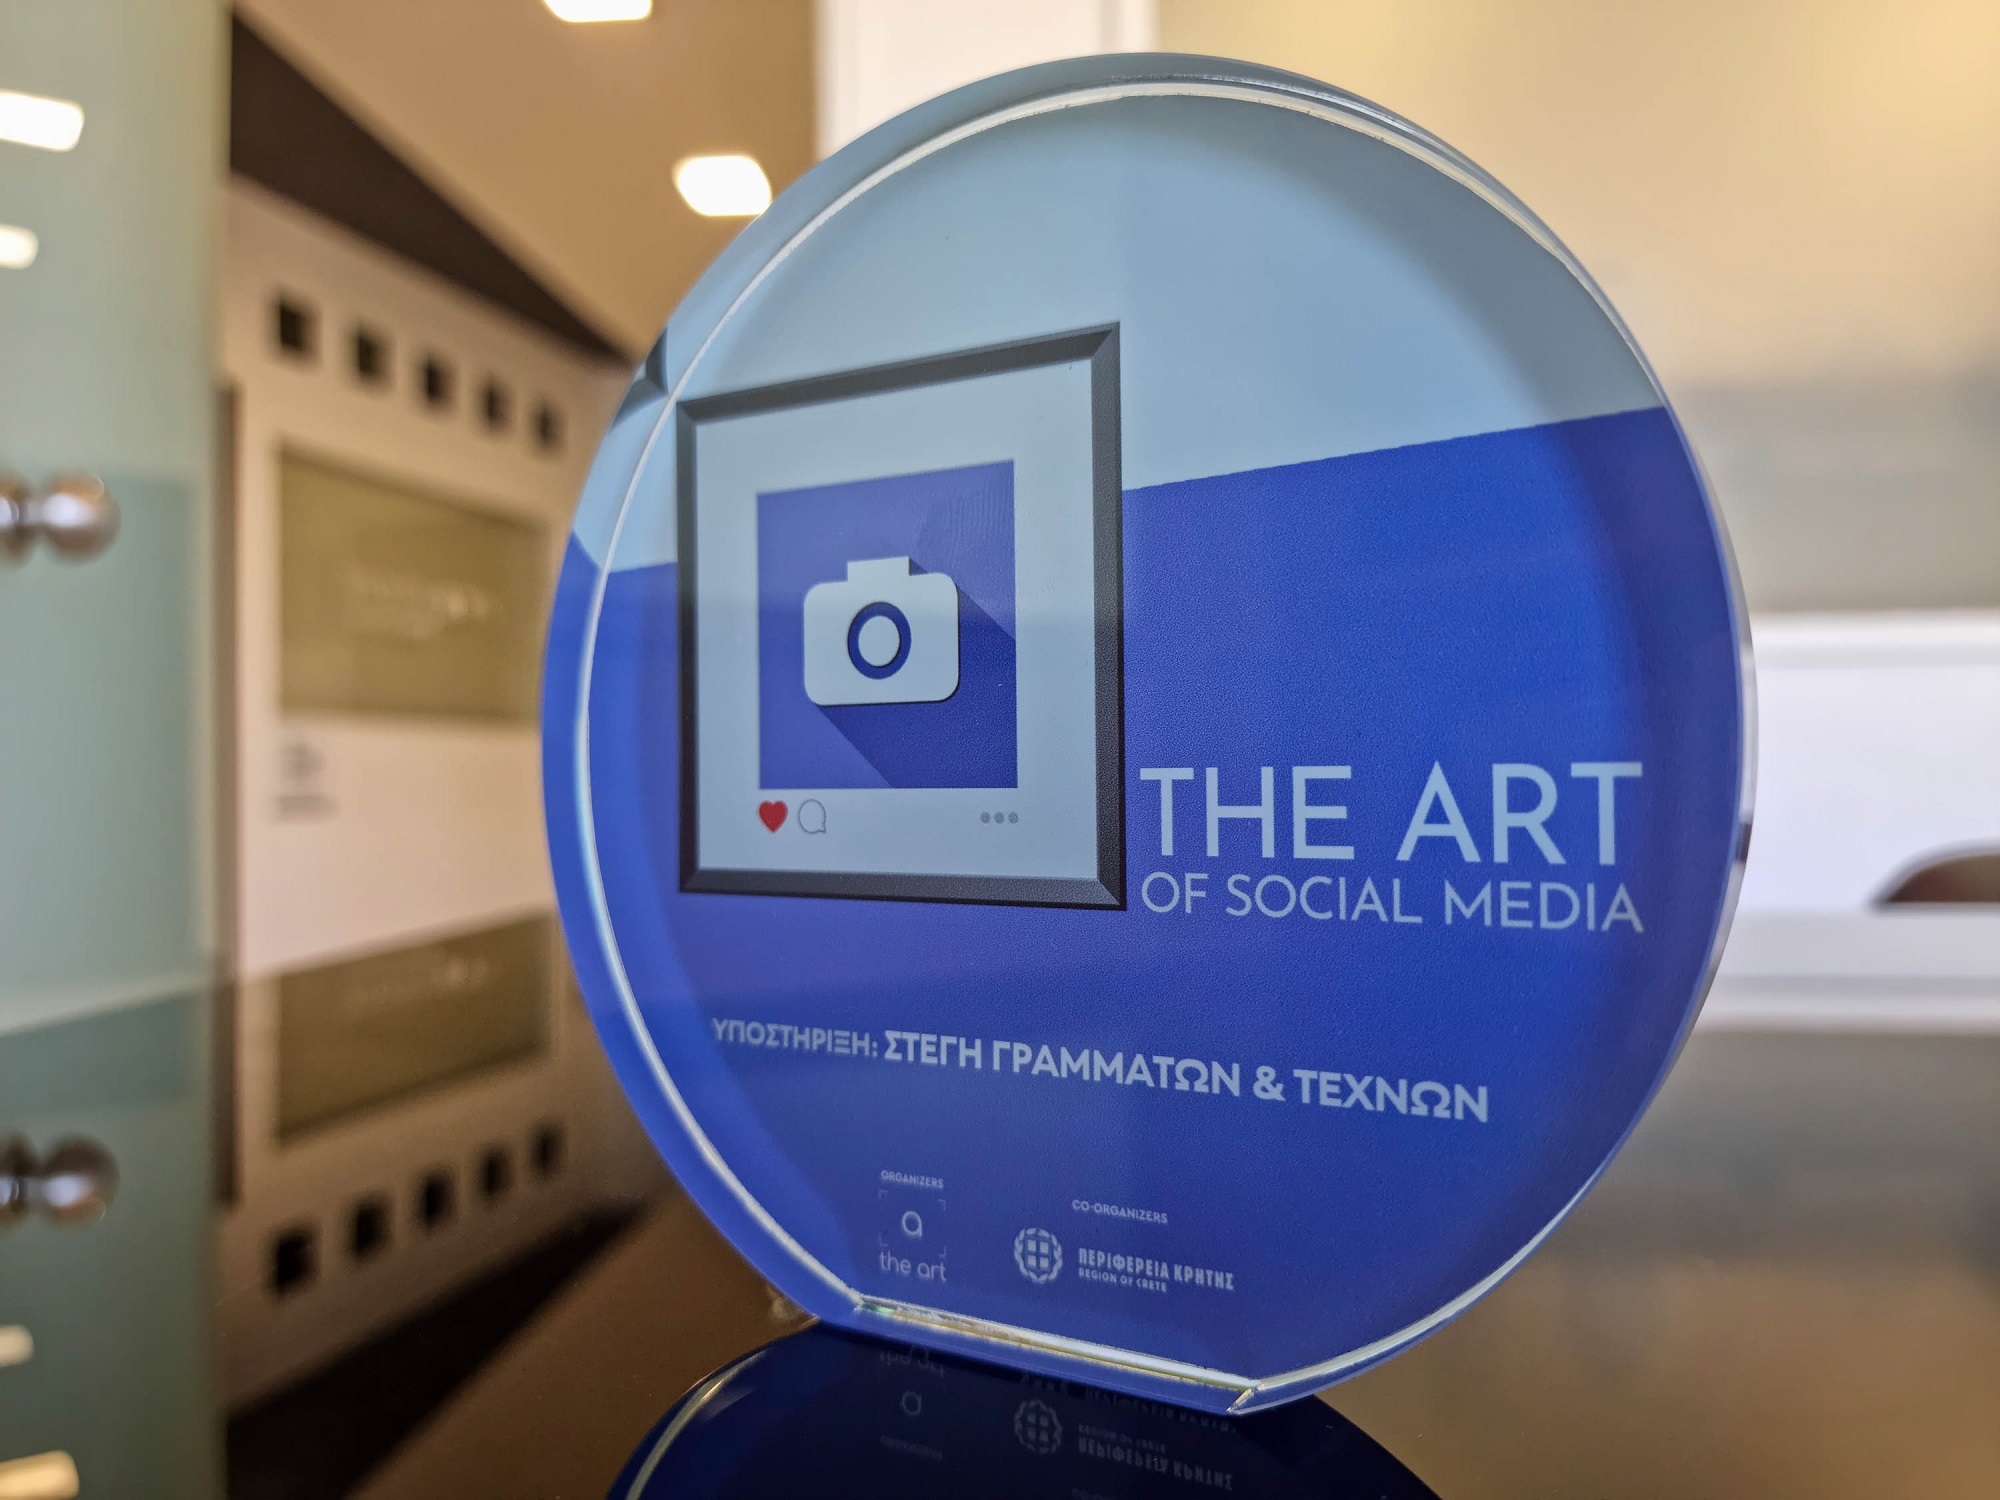 The Art of Social Media 2022 exhibition in Limassol